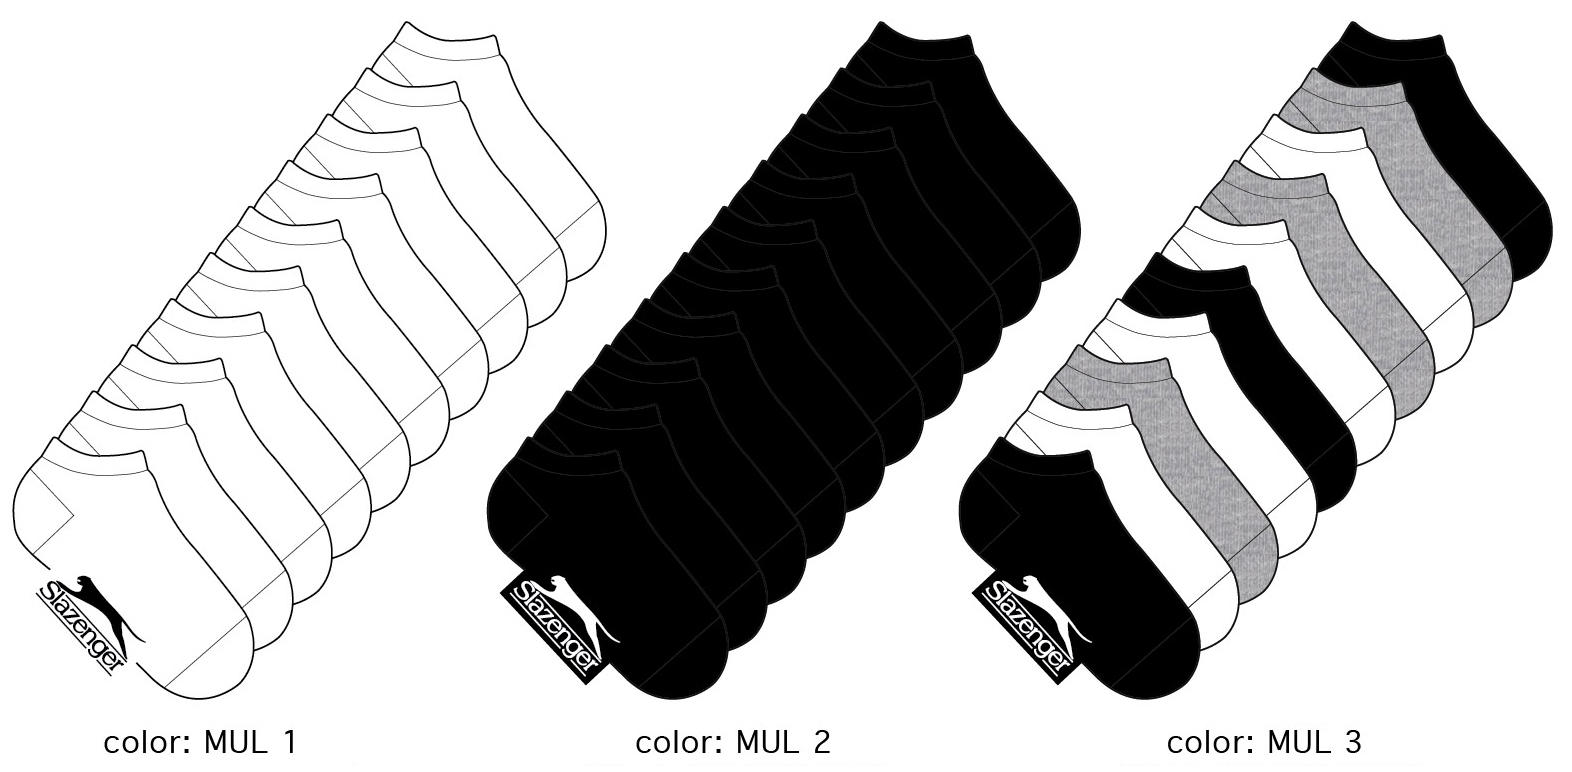 Slazenger Boy's Athletic Low Cut SOCKS - Solid Colors - Size 4-6 - 10-Pair Packs